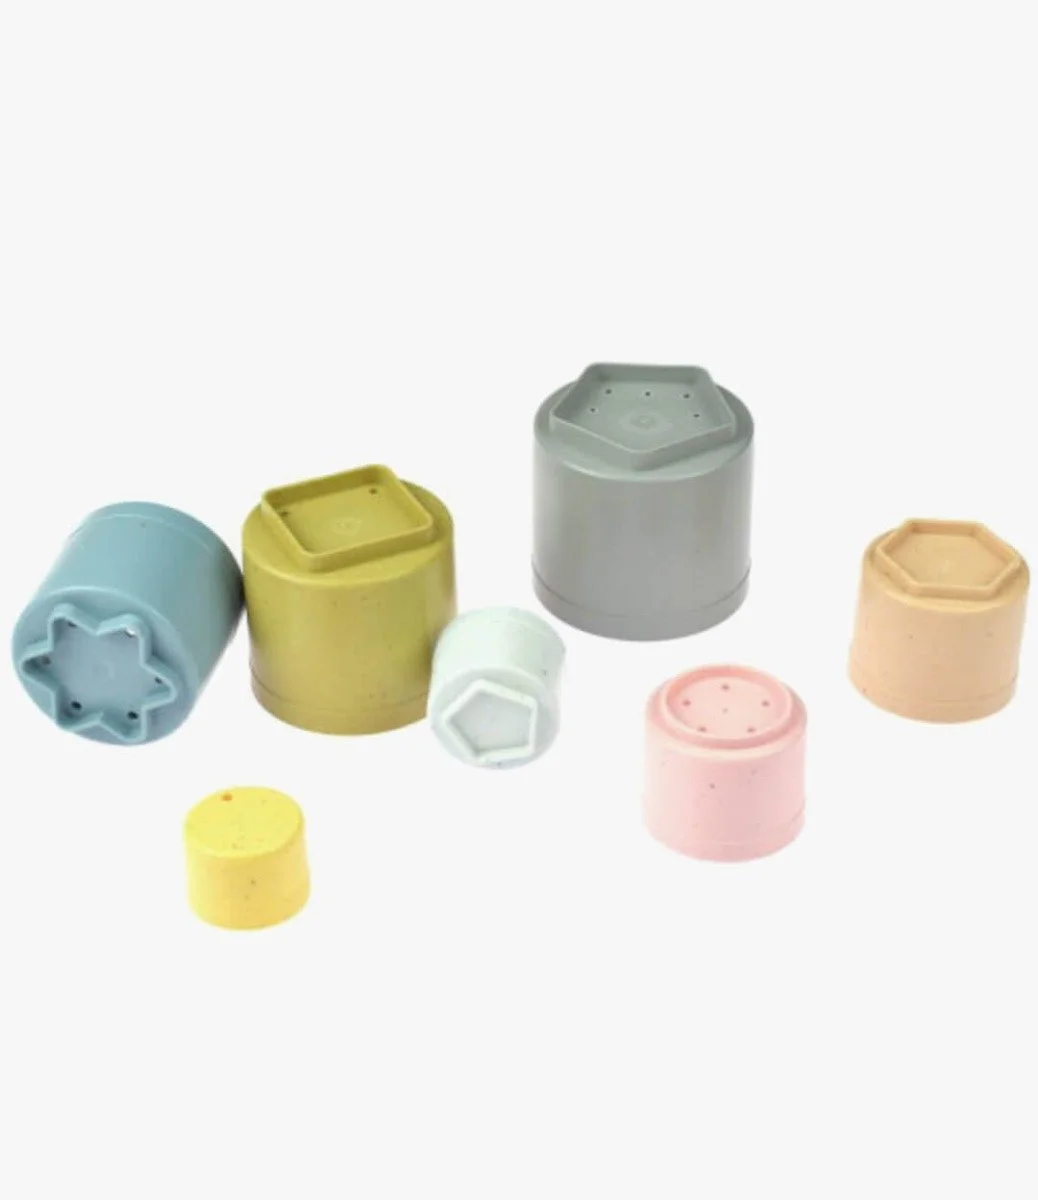 Bioplastic Play Cups